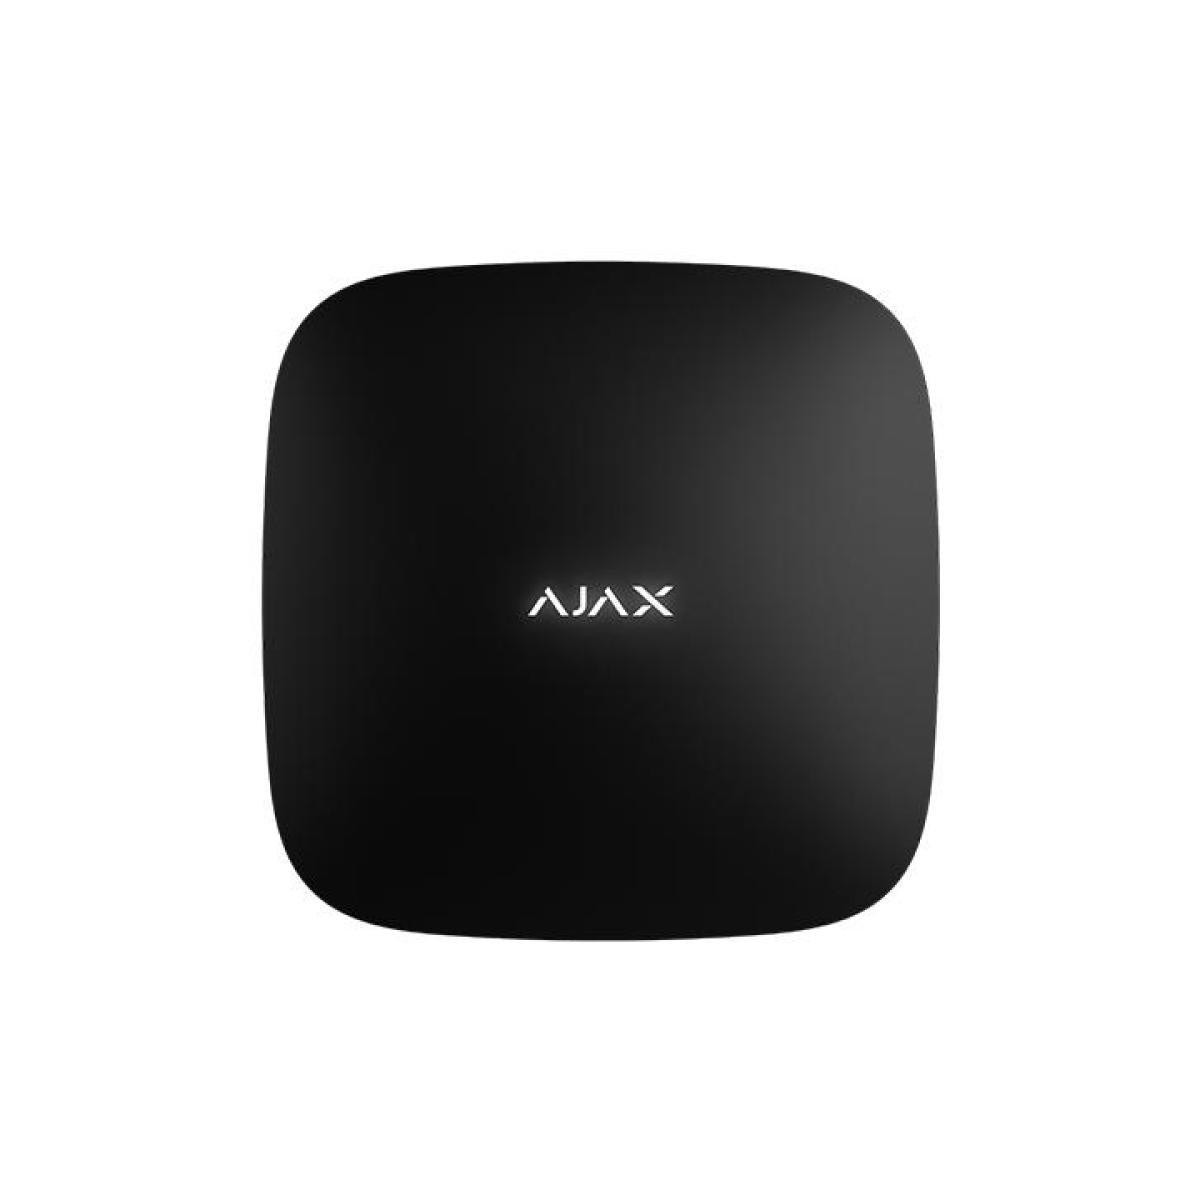 Ajax ReX 2 Radio signal range extender with photo verification support Black